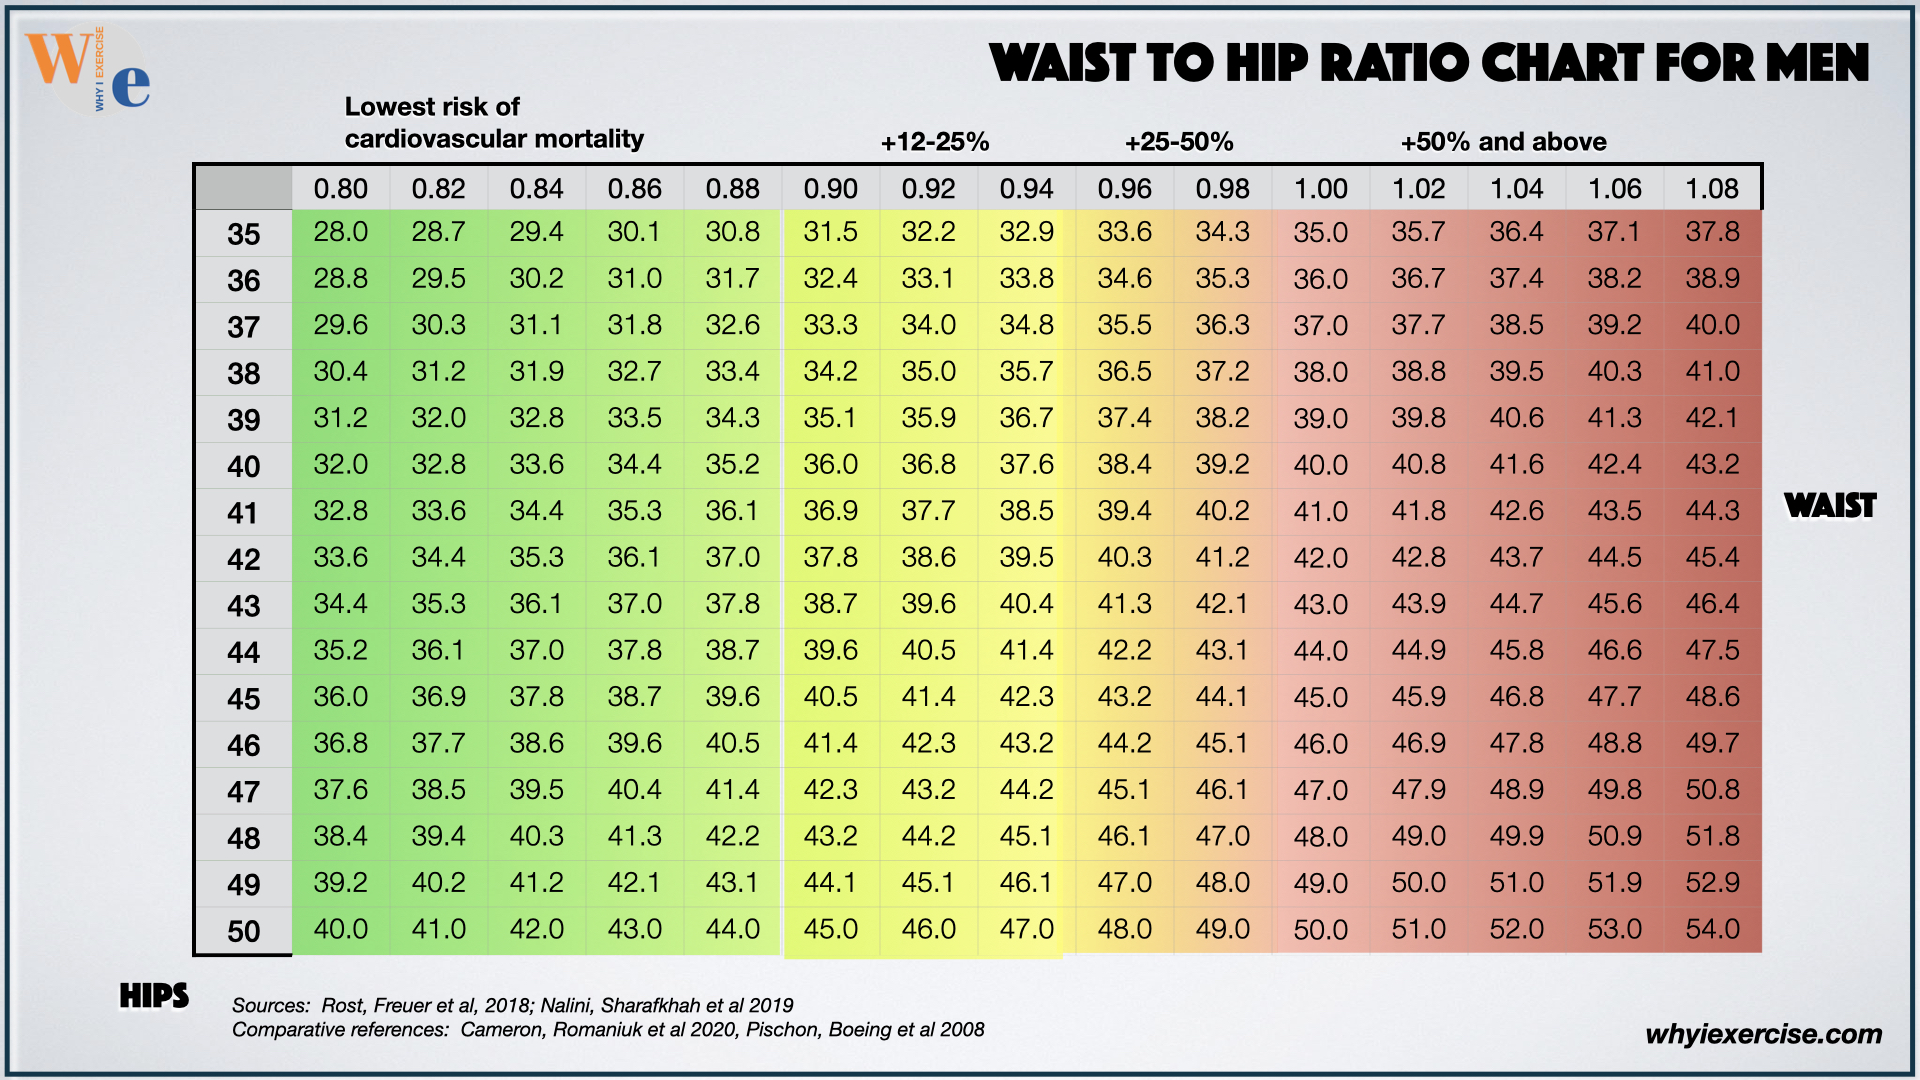 Waist to hip ratio chart for men